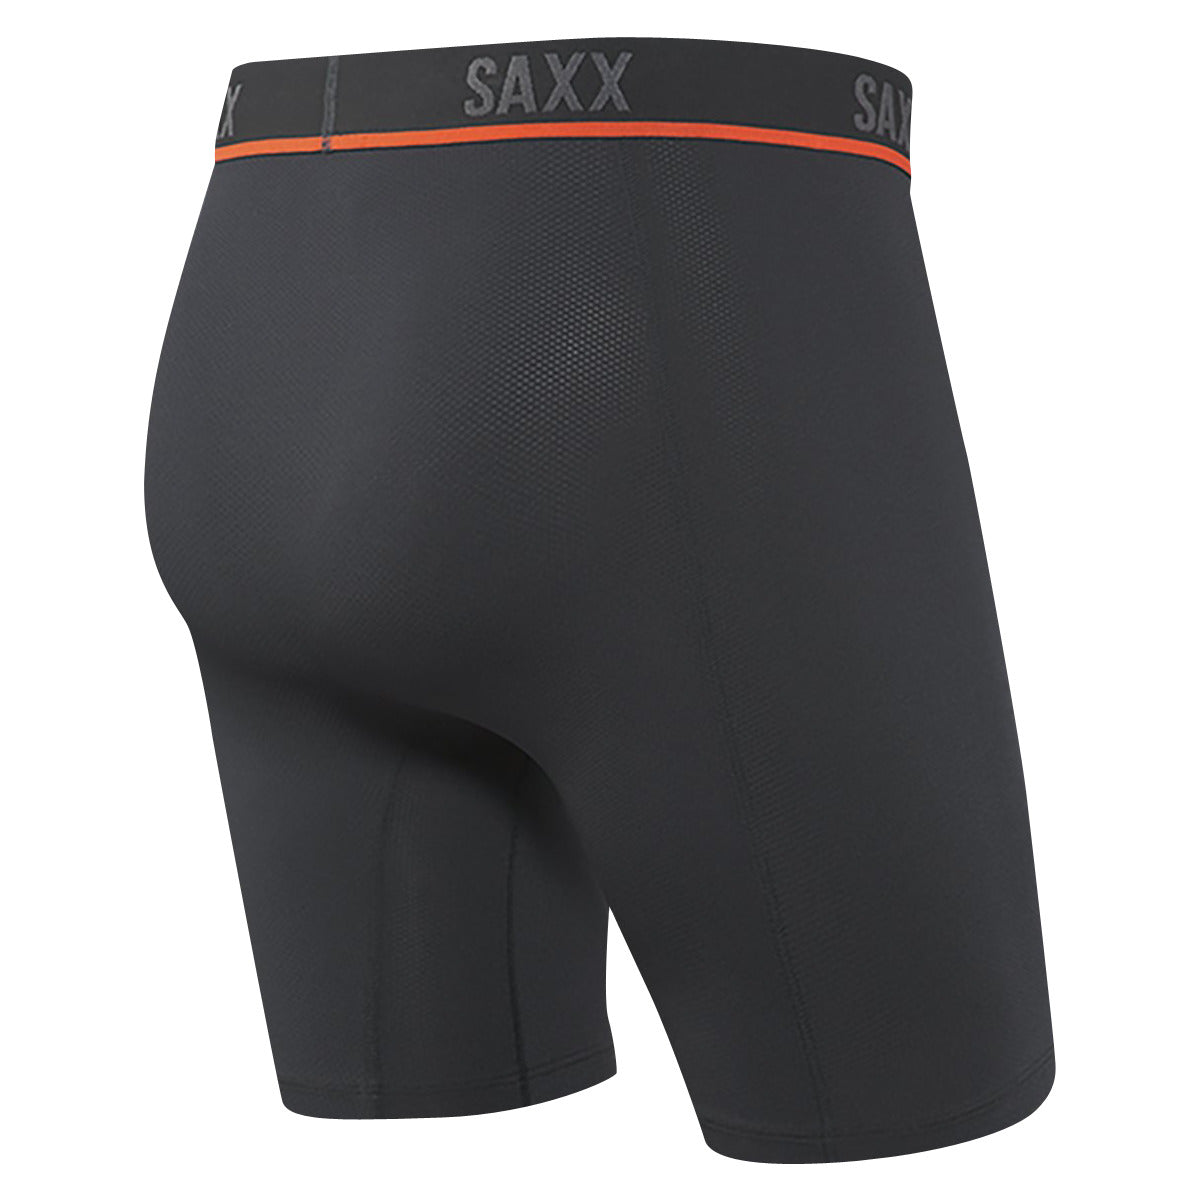 Kinetic HD Boxer Brief, SAXX Underwear